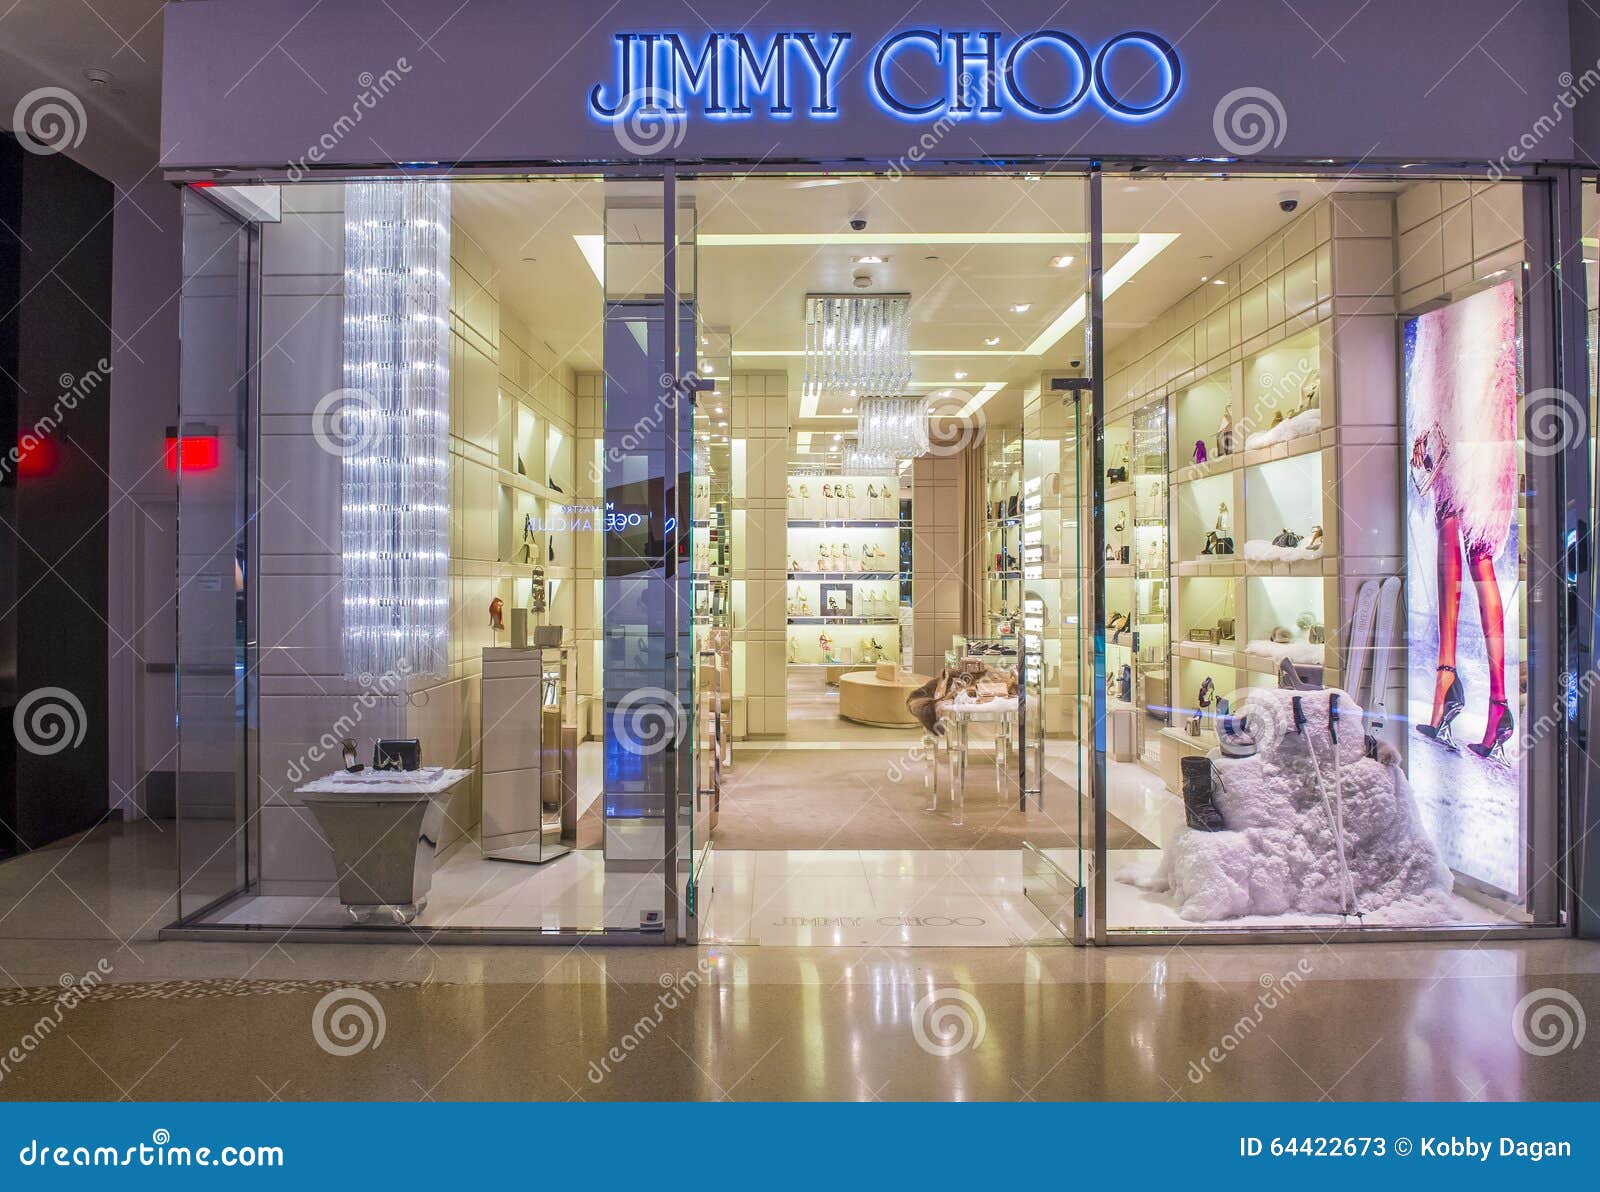 Jimmy Choo Store Editorial Stock Photo - Image: 64422673